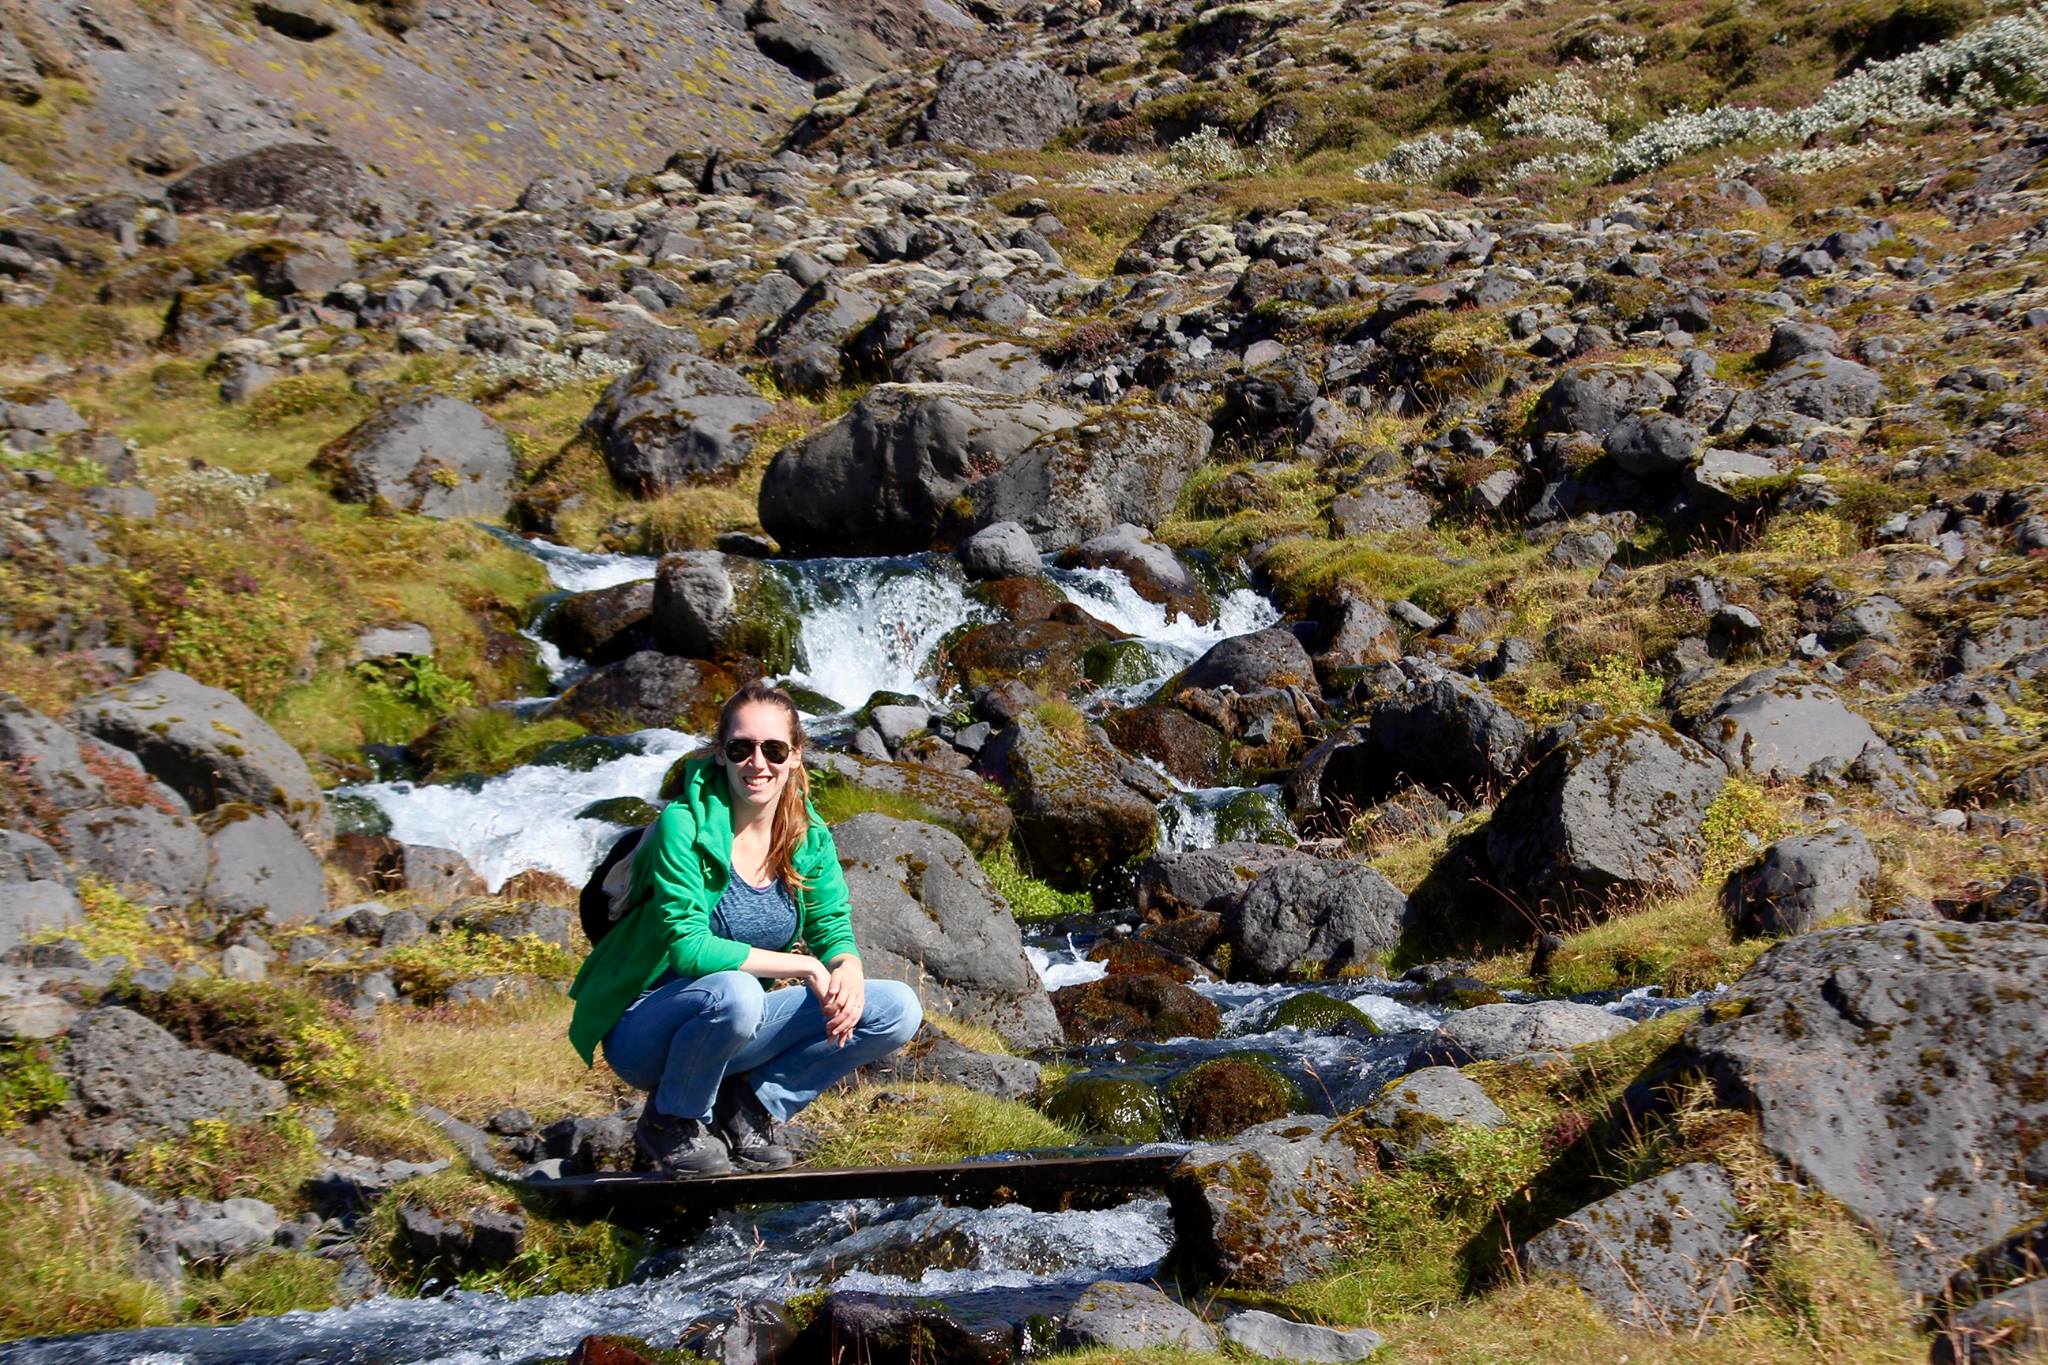 Kathi sitting in front of water running down from the Hvannadalshnúkur peak